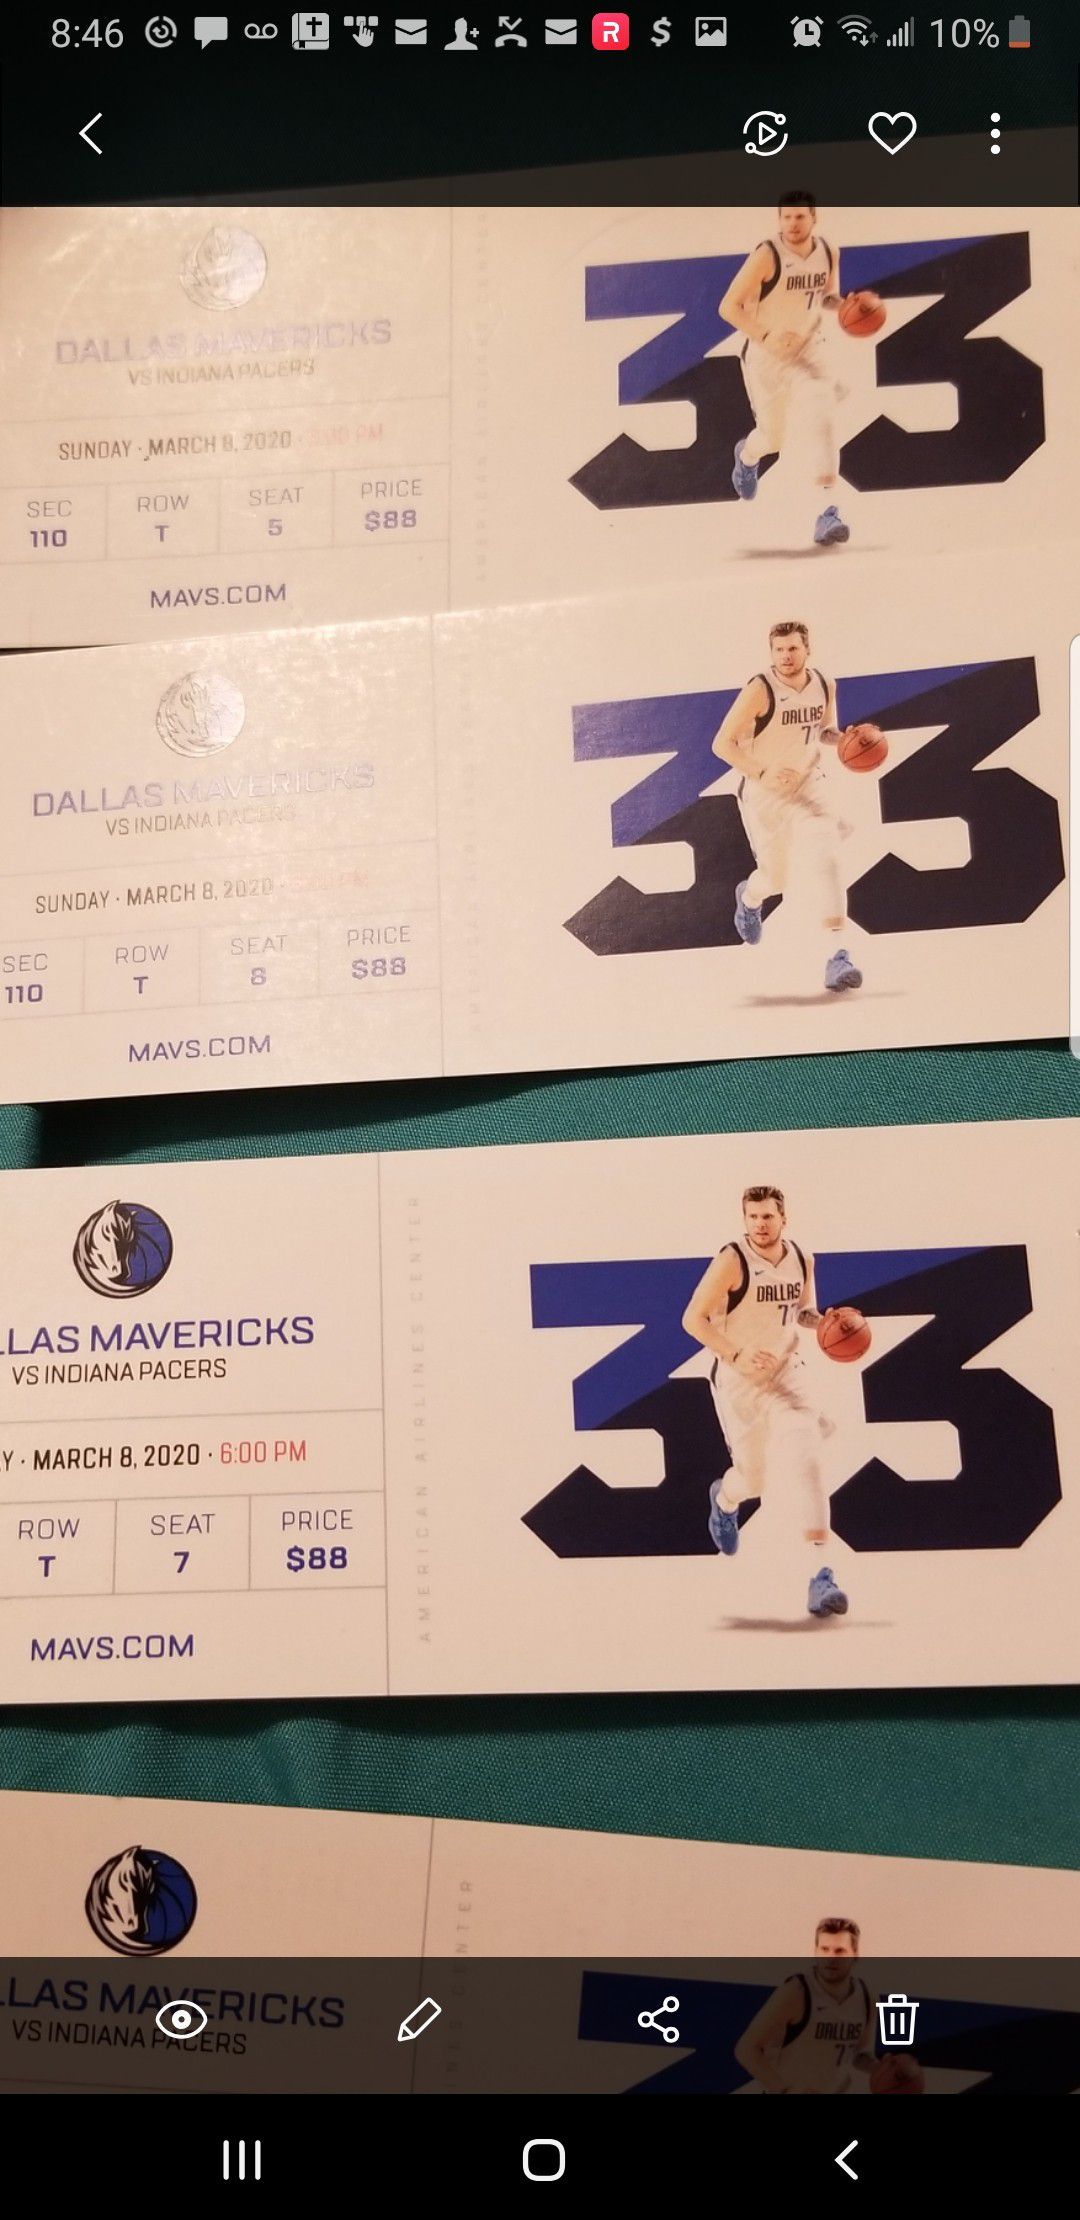 4 Mavericks vs Indiana Pacers tickets $80 each